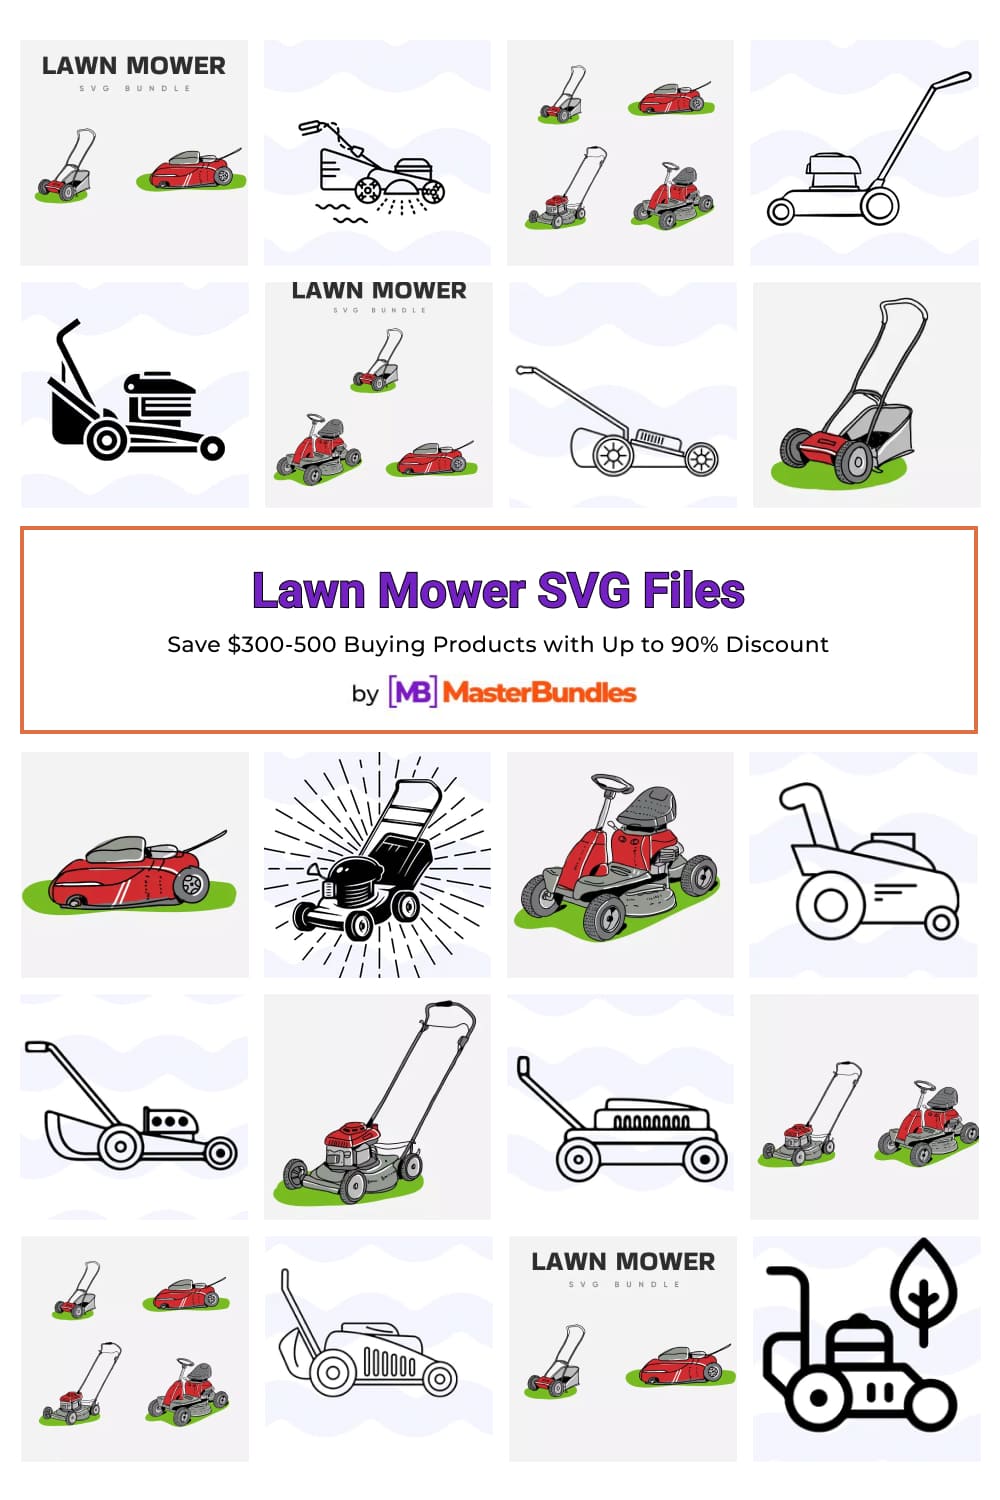 Lawn Mower SVG Files Pinterest image.